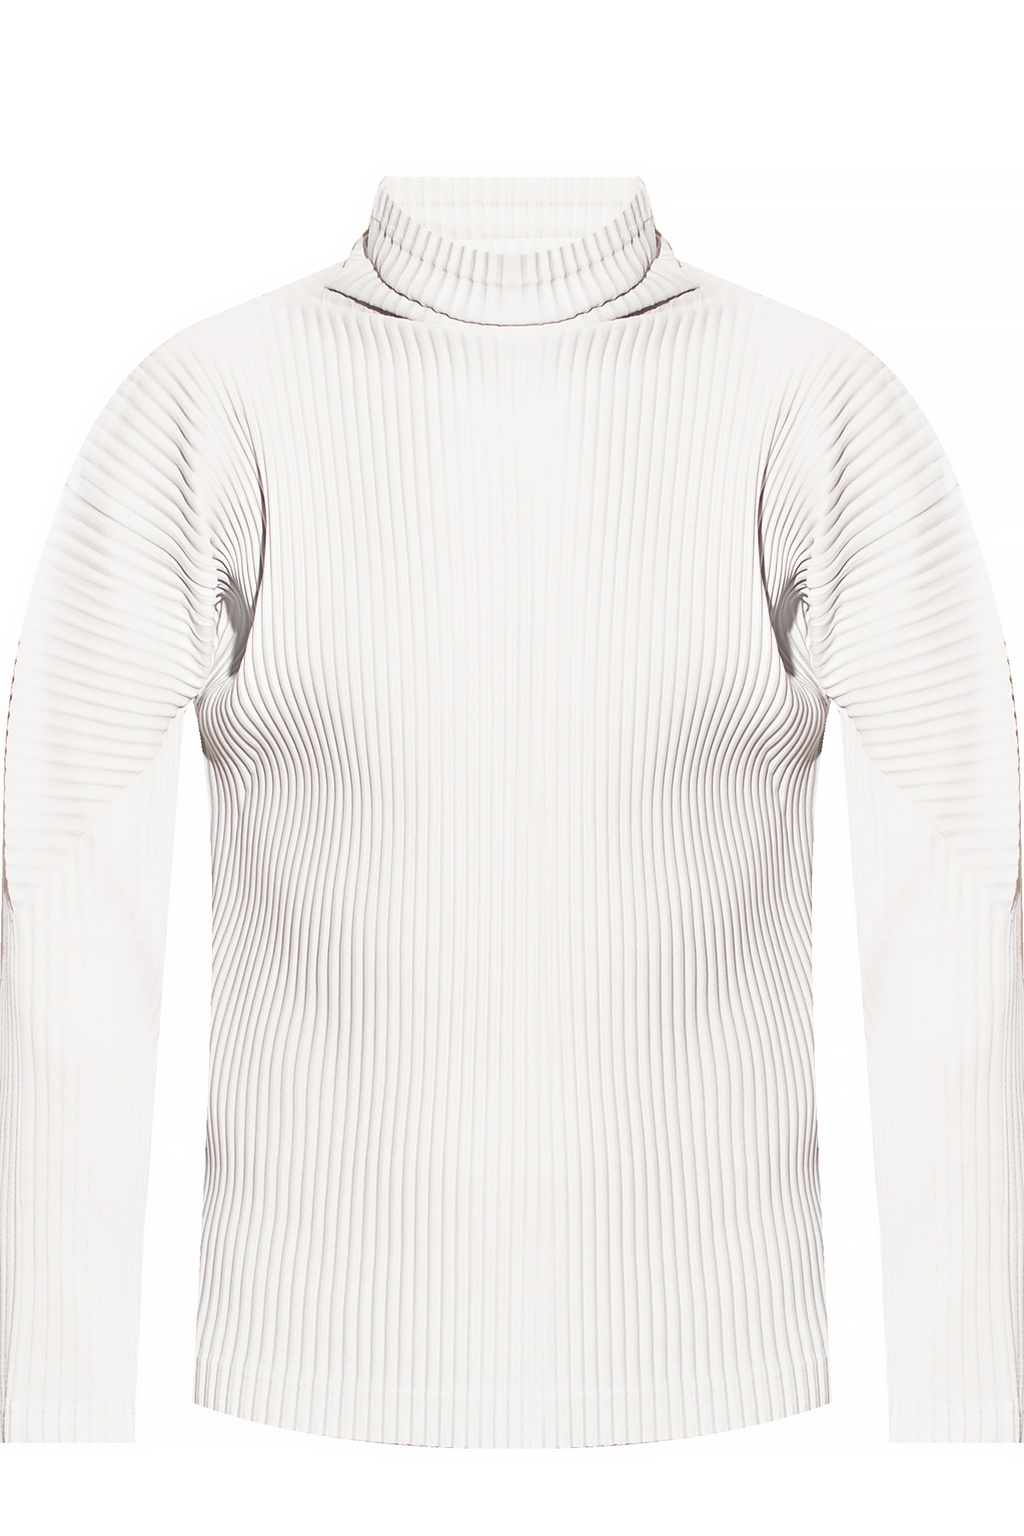 Issey Miyake Homme Plisse Pleated turtleneck sweater | Men's